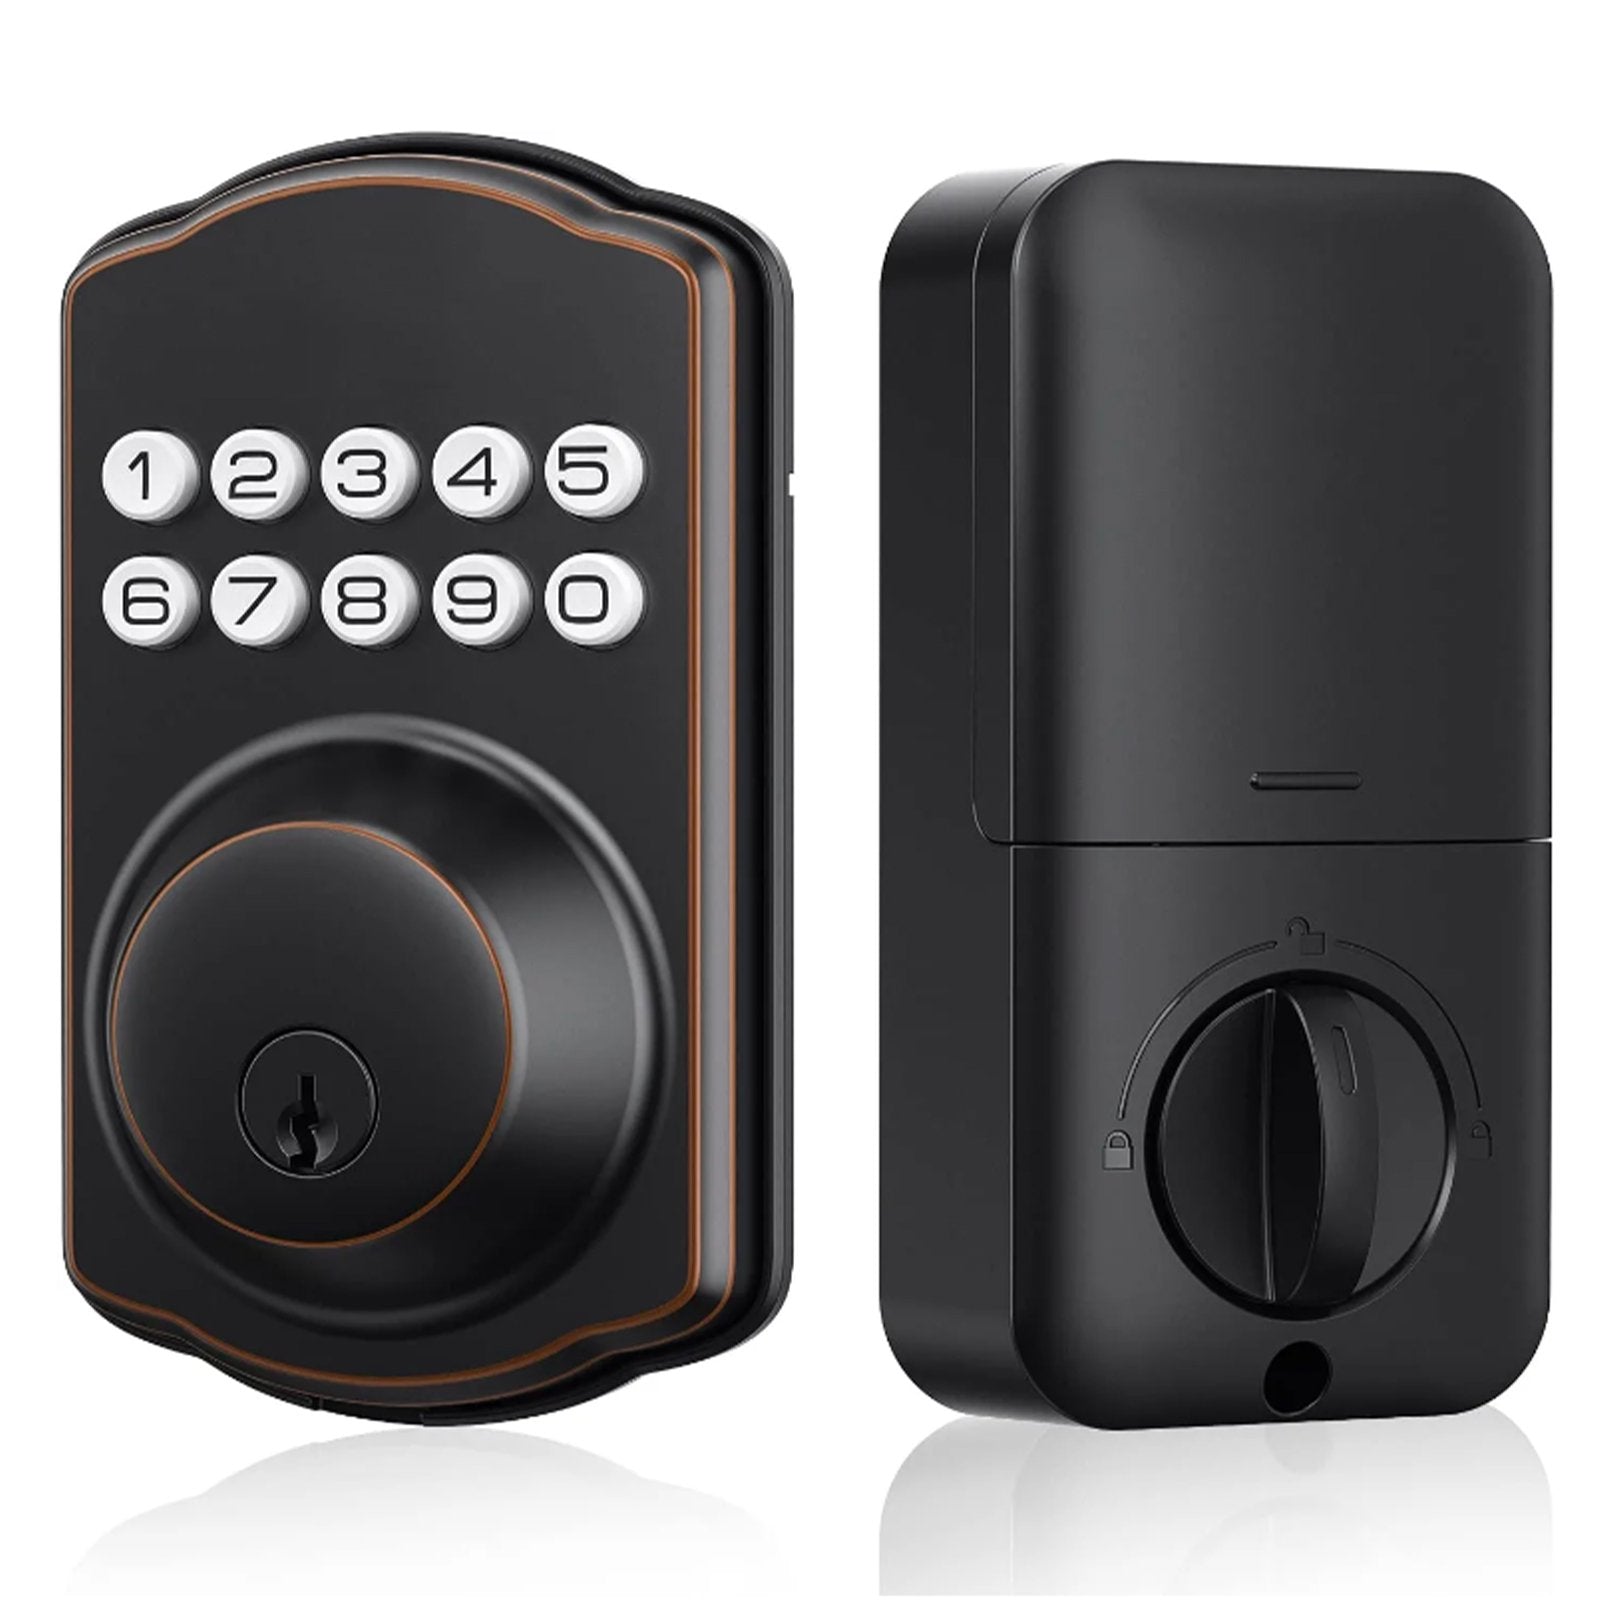 SKONYON Keypad Electronic Deadbolt Door Lock, Keyless Entry Door Lock With 1-Touch Motorized Auto-Locking